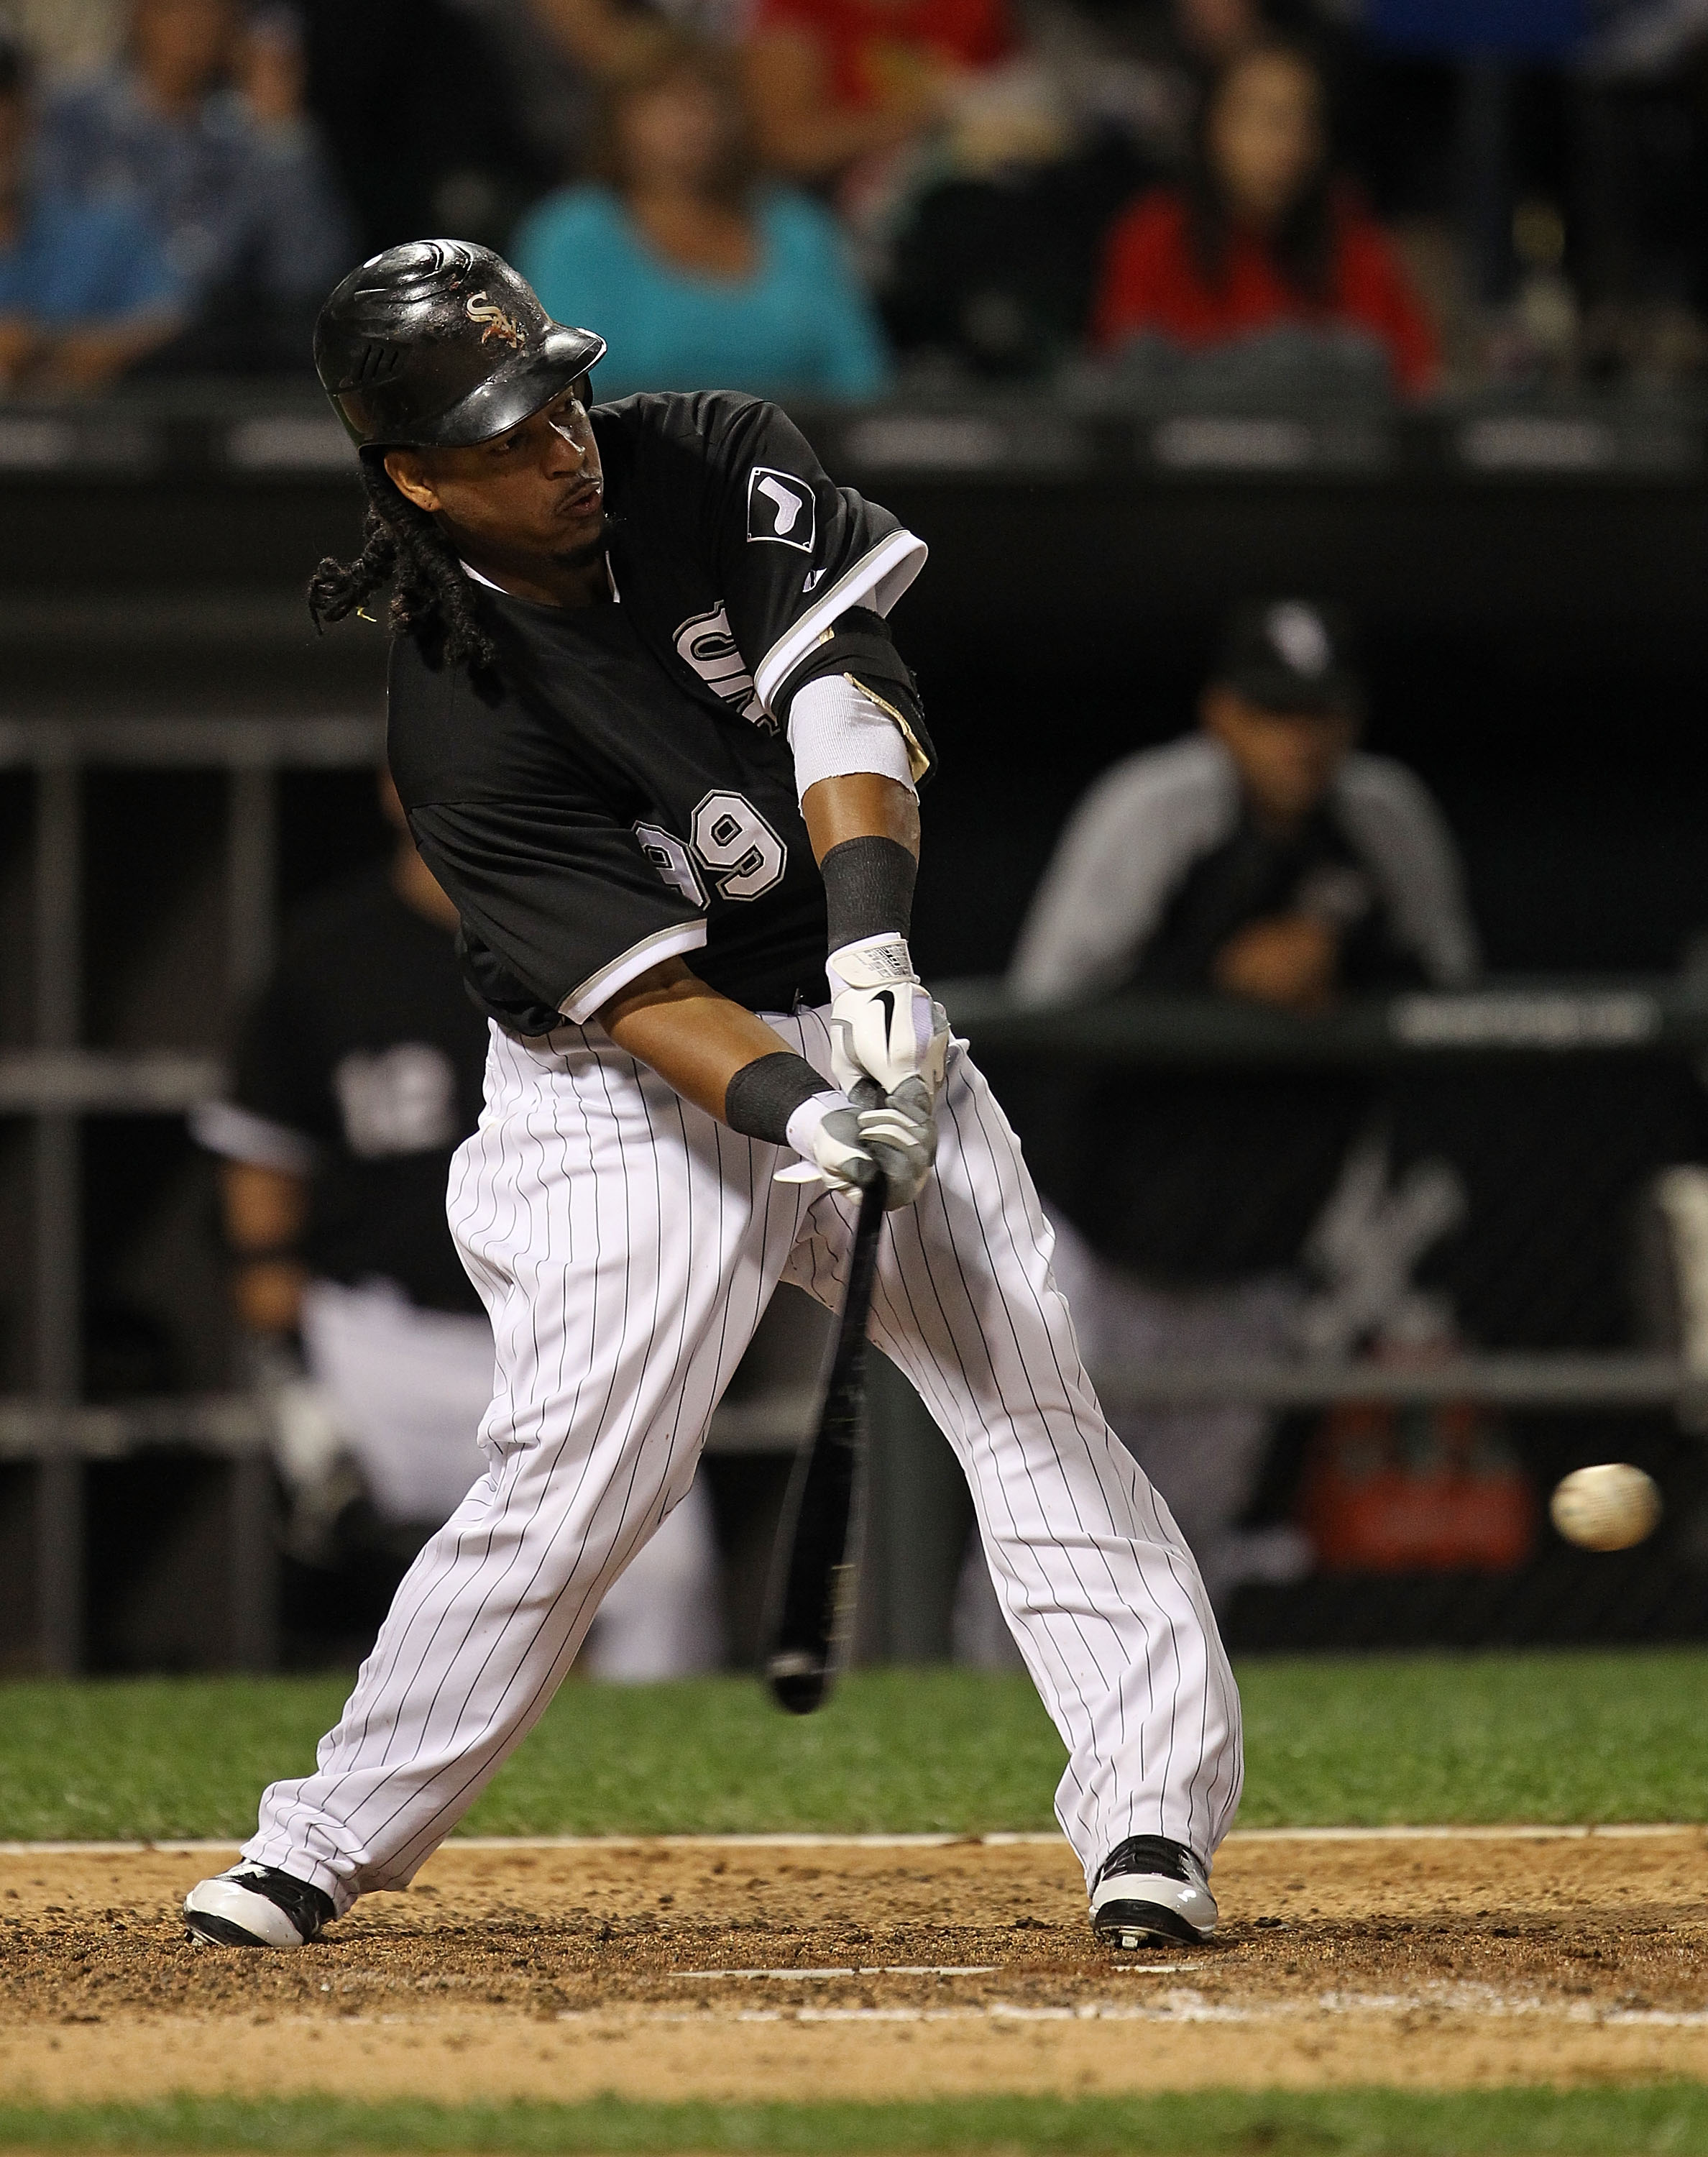 MLB Rumors: Could Manny Ramirez Help the New York Yankees?